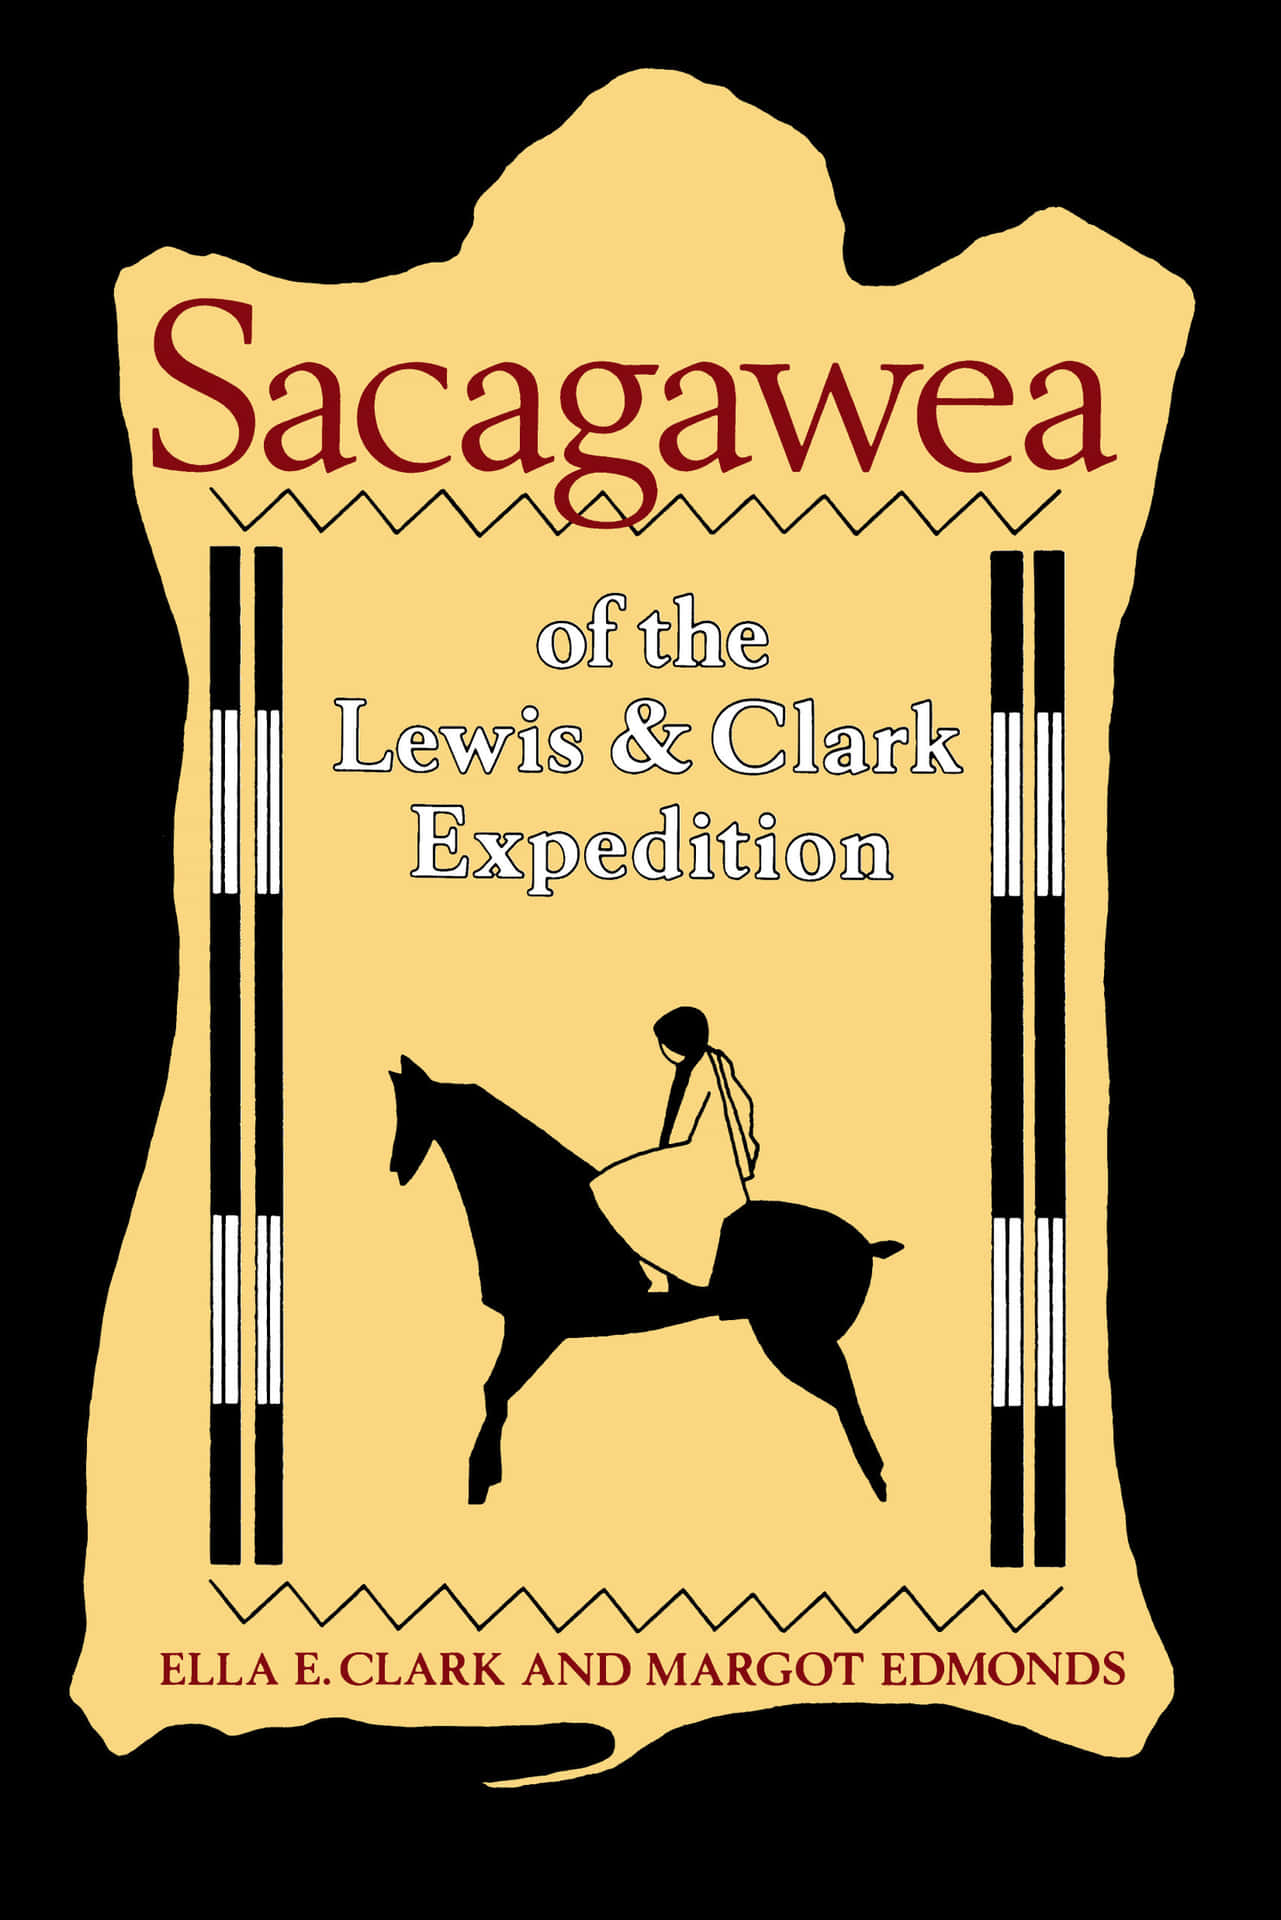 Sacagawea, a Historical Figure